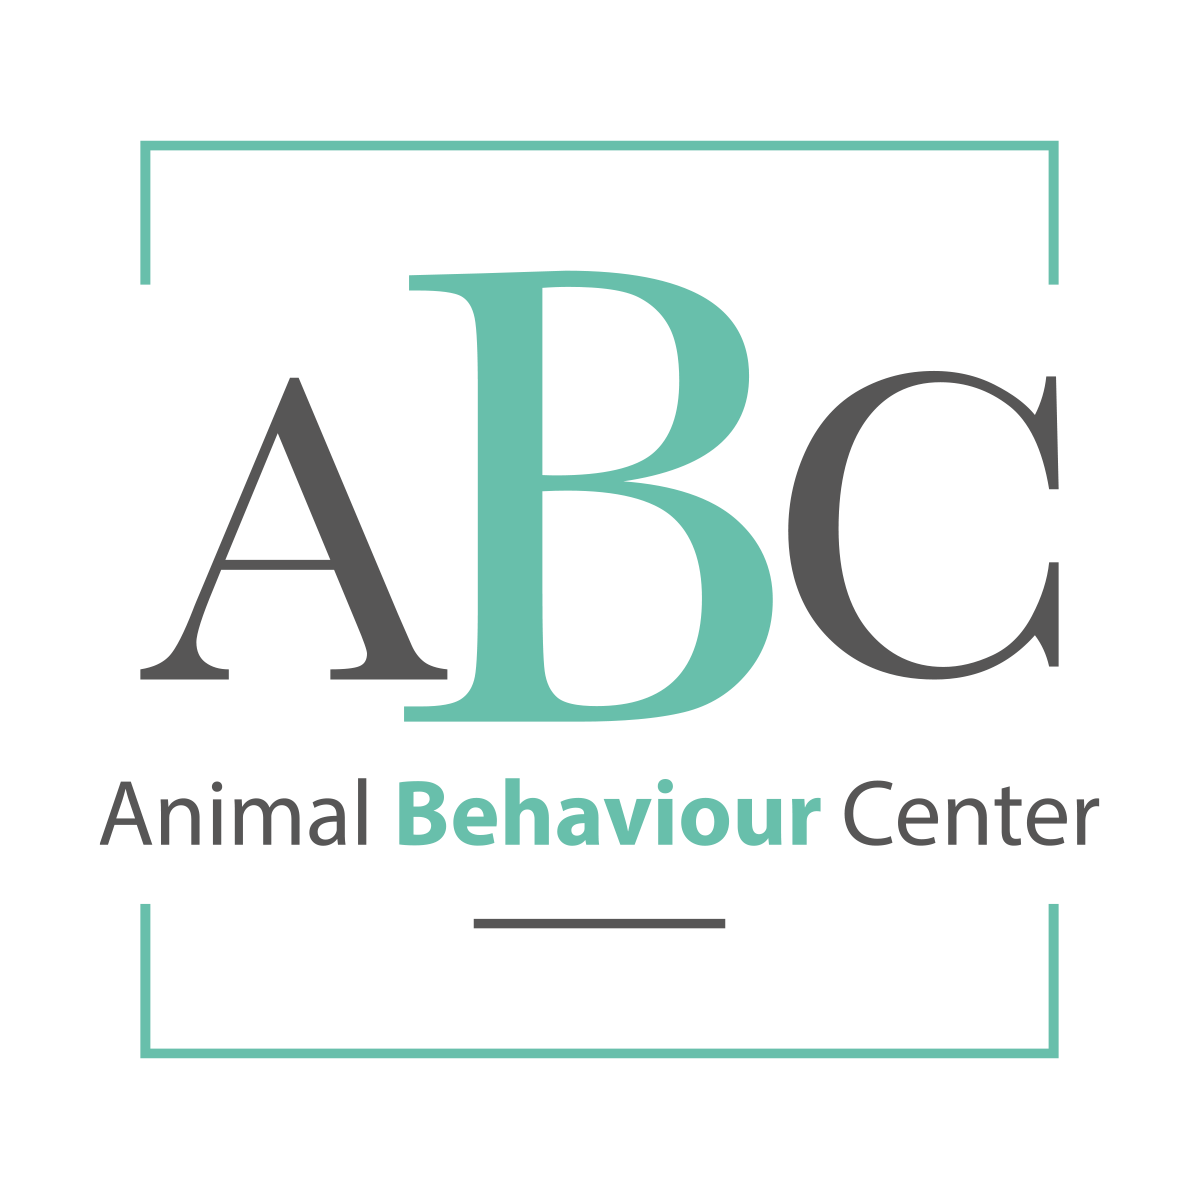 Animal Behaviour Center